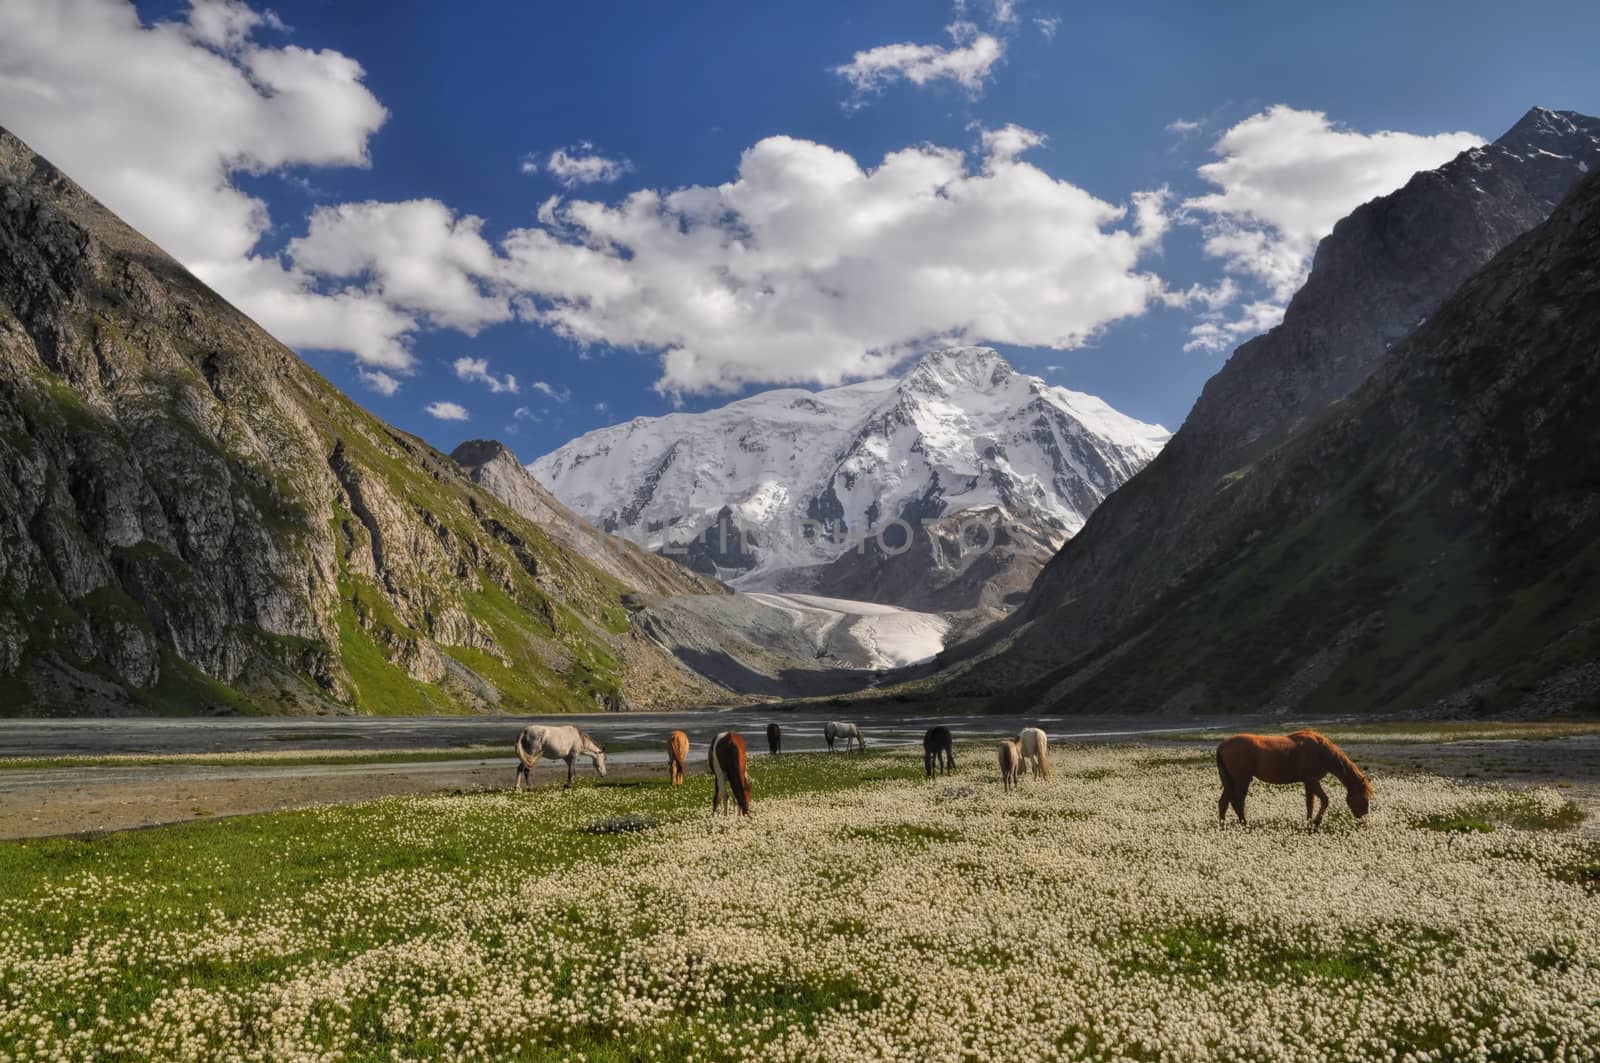 Tian-Shan in Kyrgyzstan by MichalKnitl